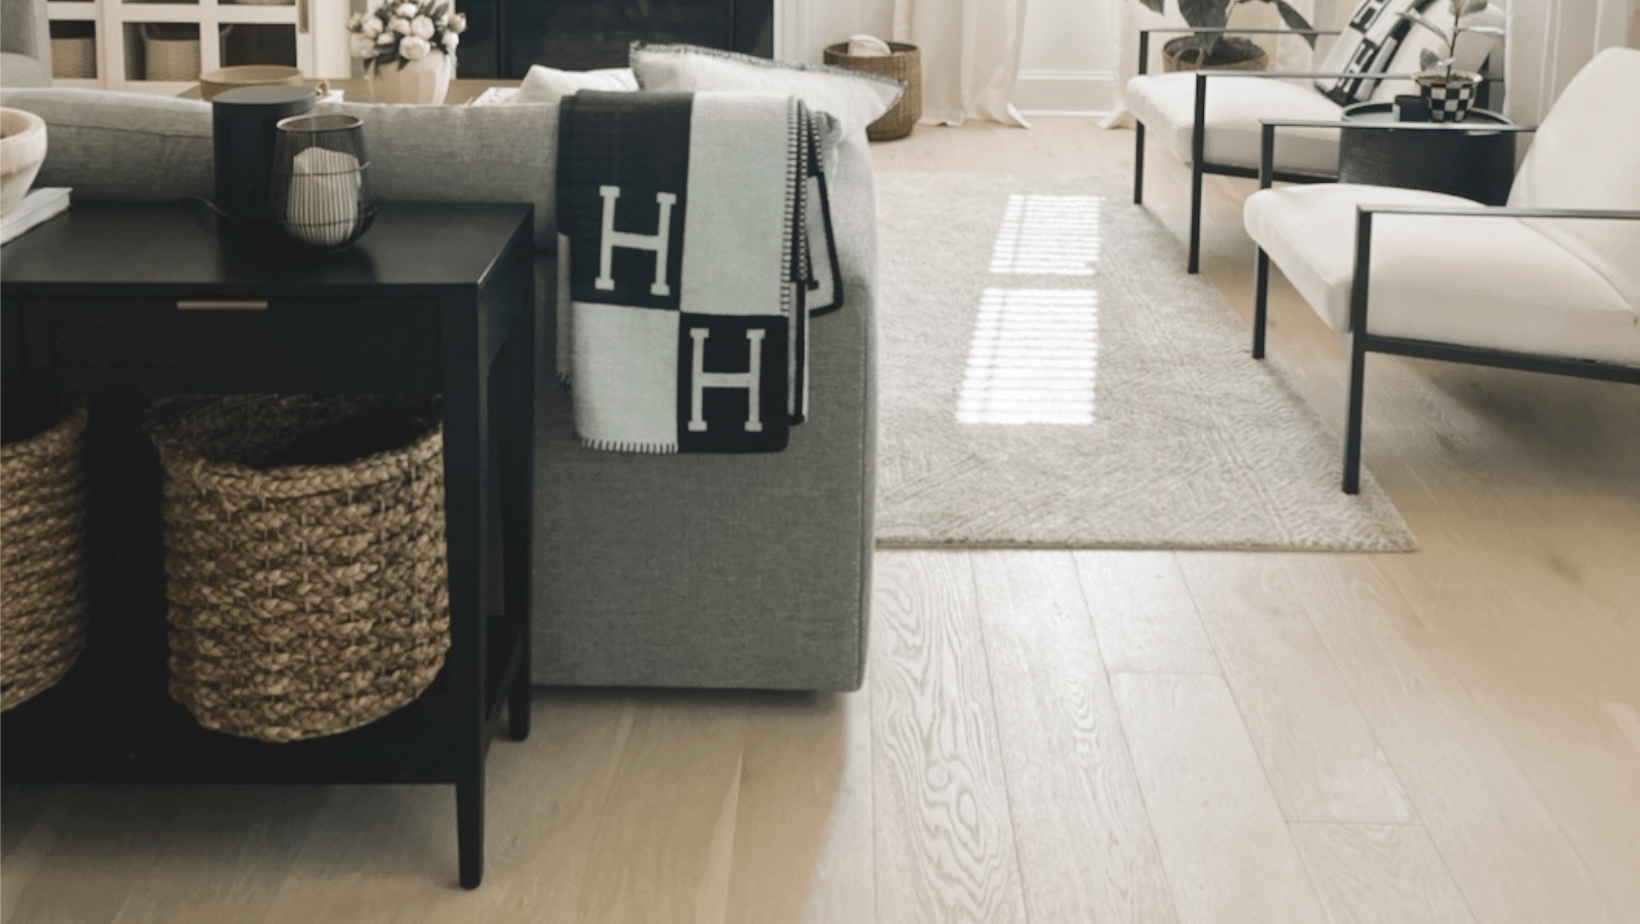 Hardwood Floors Installed in Living Room